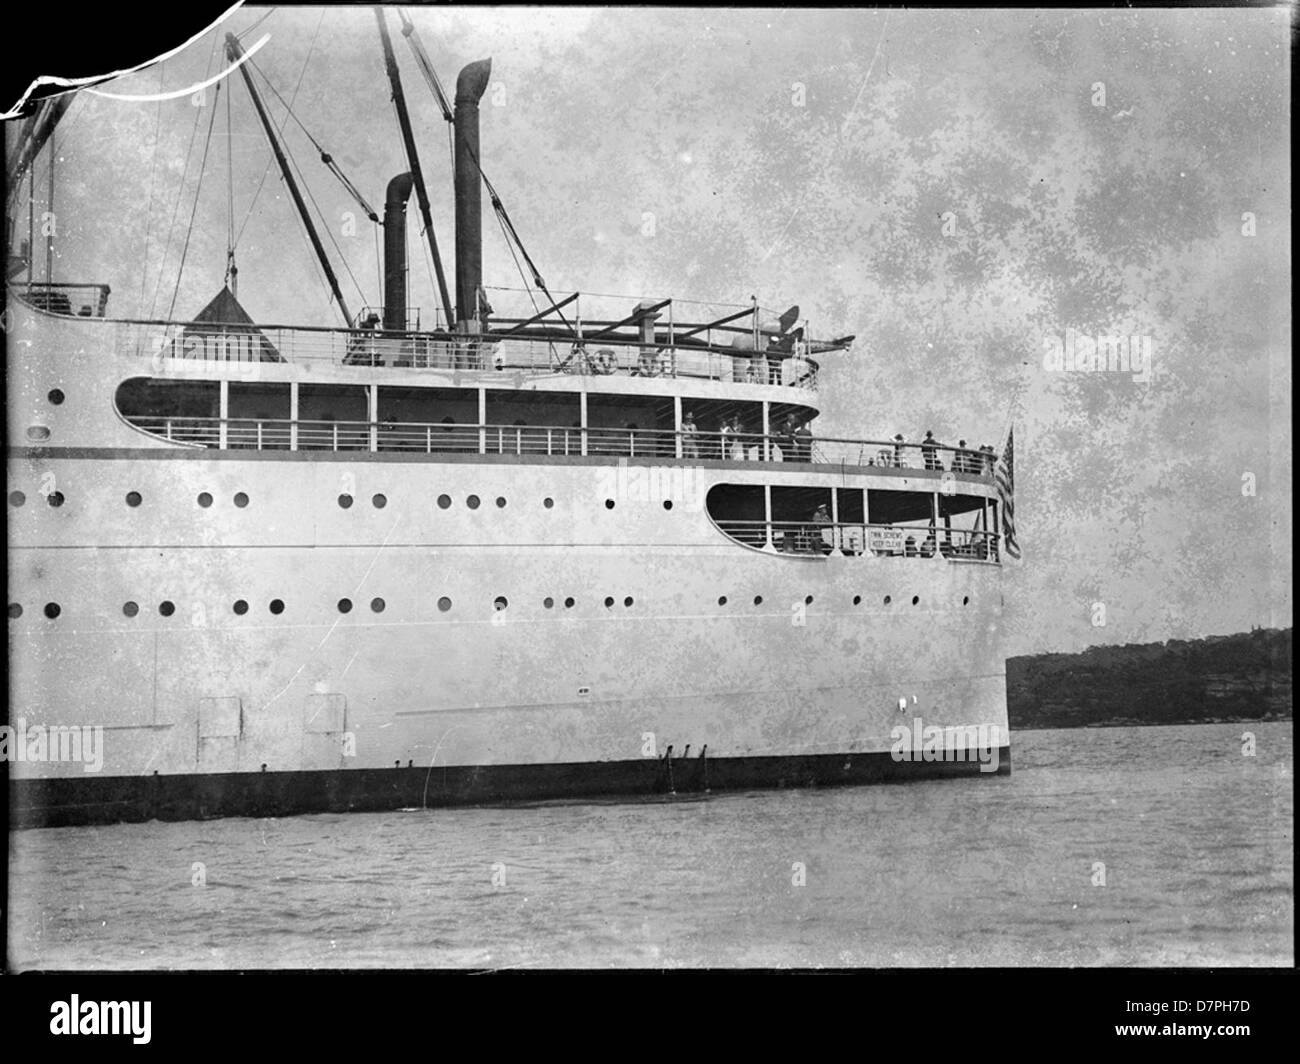 Stern of passenger ship Stock Photo